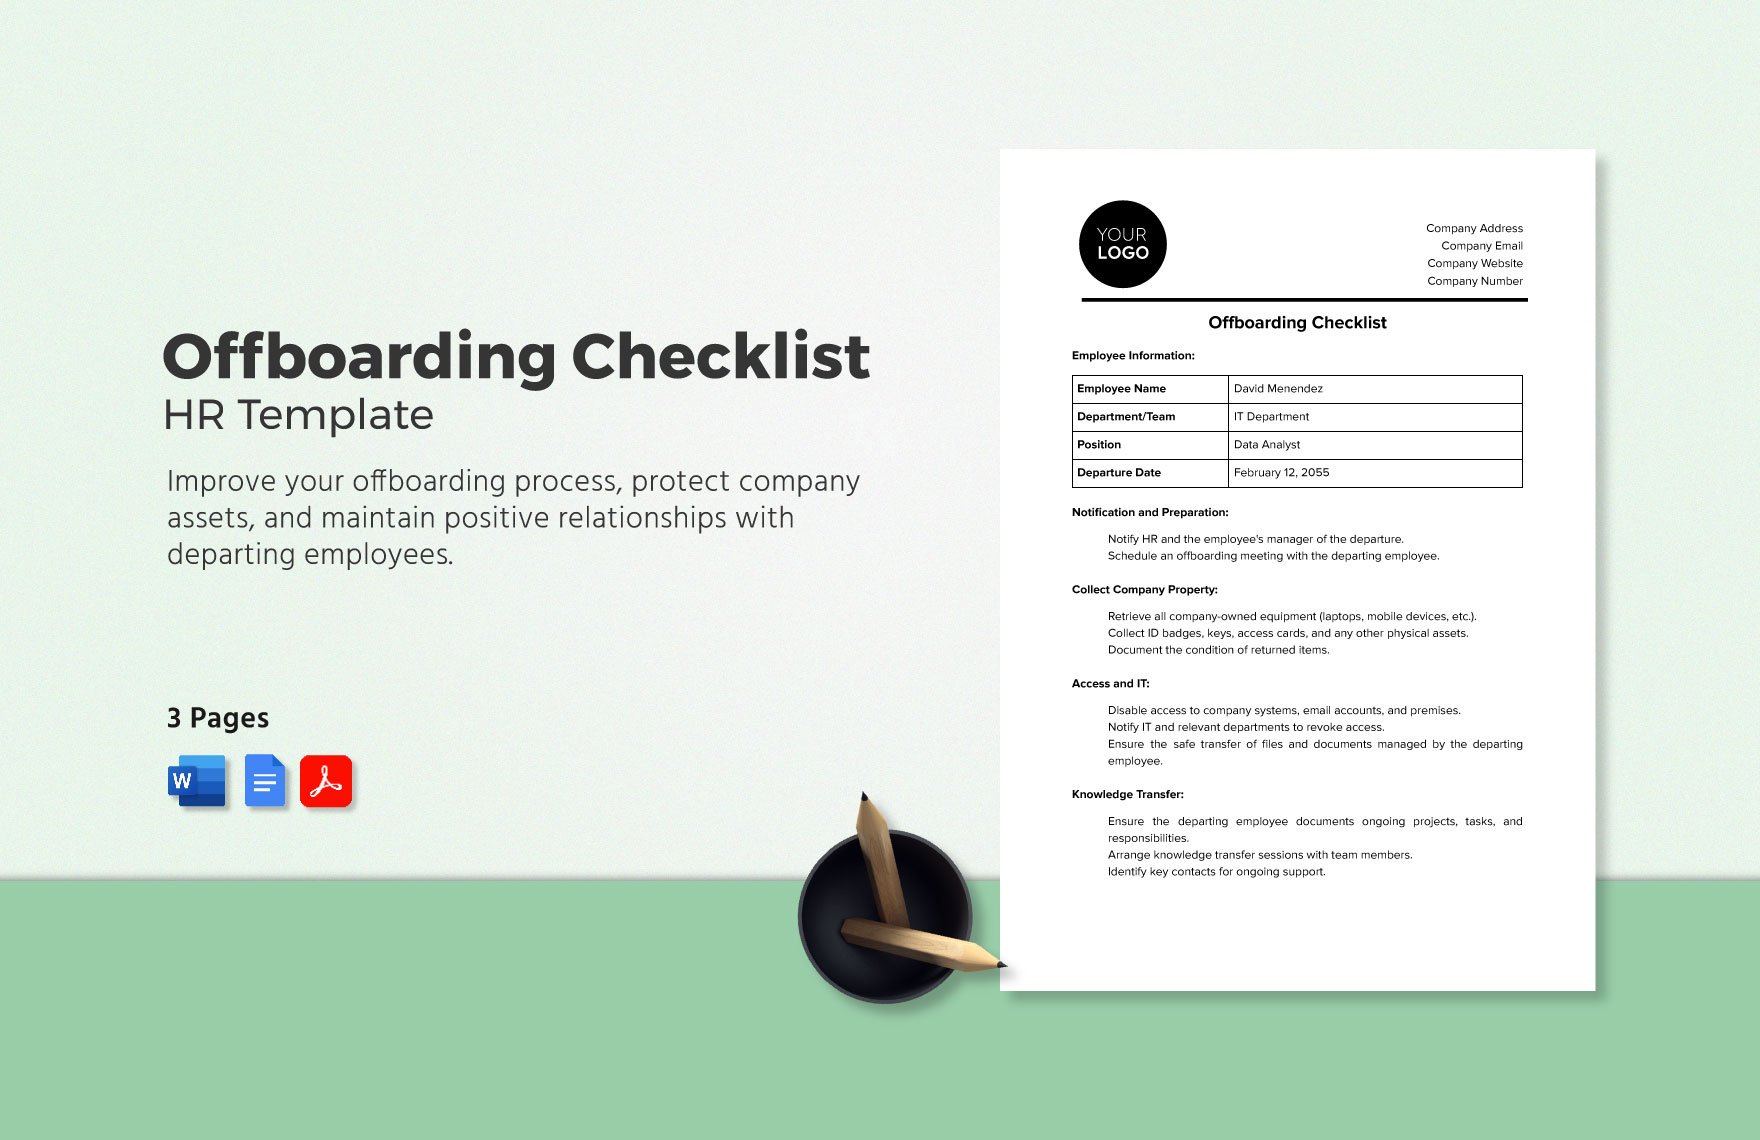 Offboarding Checklist HR Template